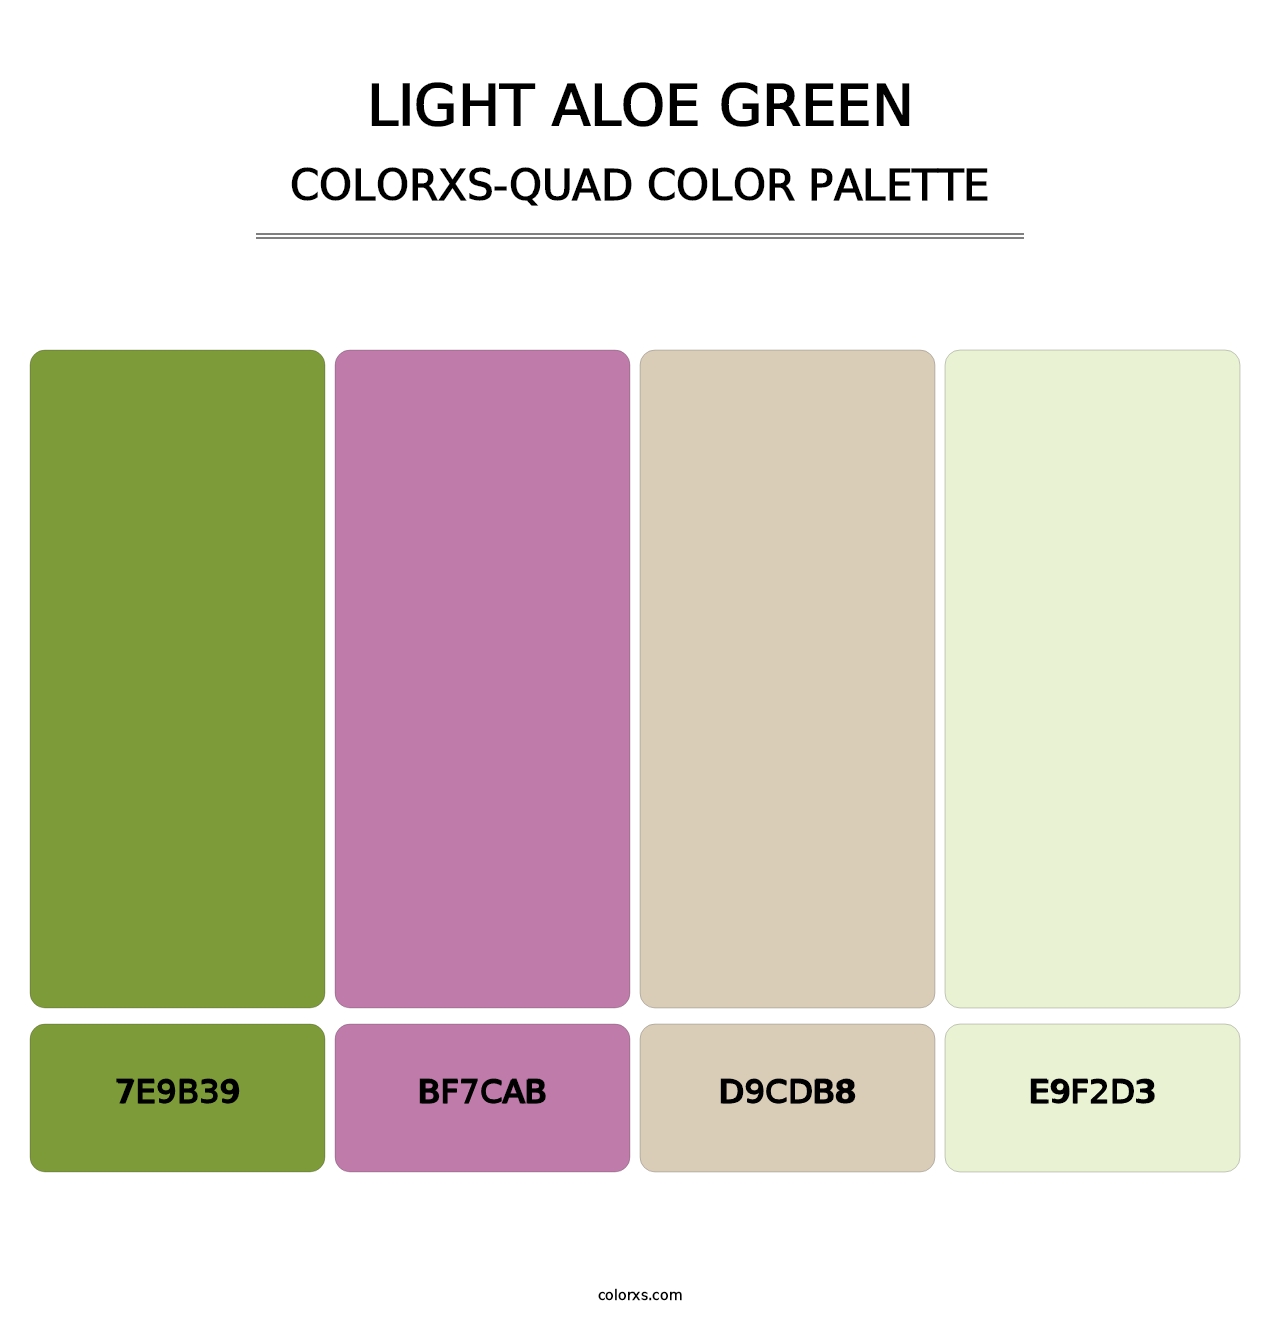 Light Aloe Green - Colorxs Quad Palette